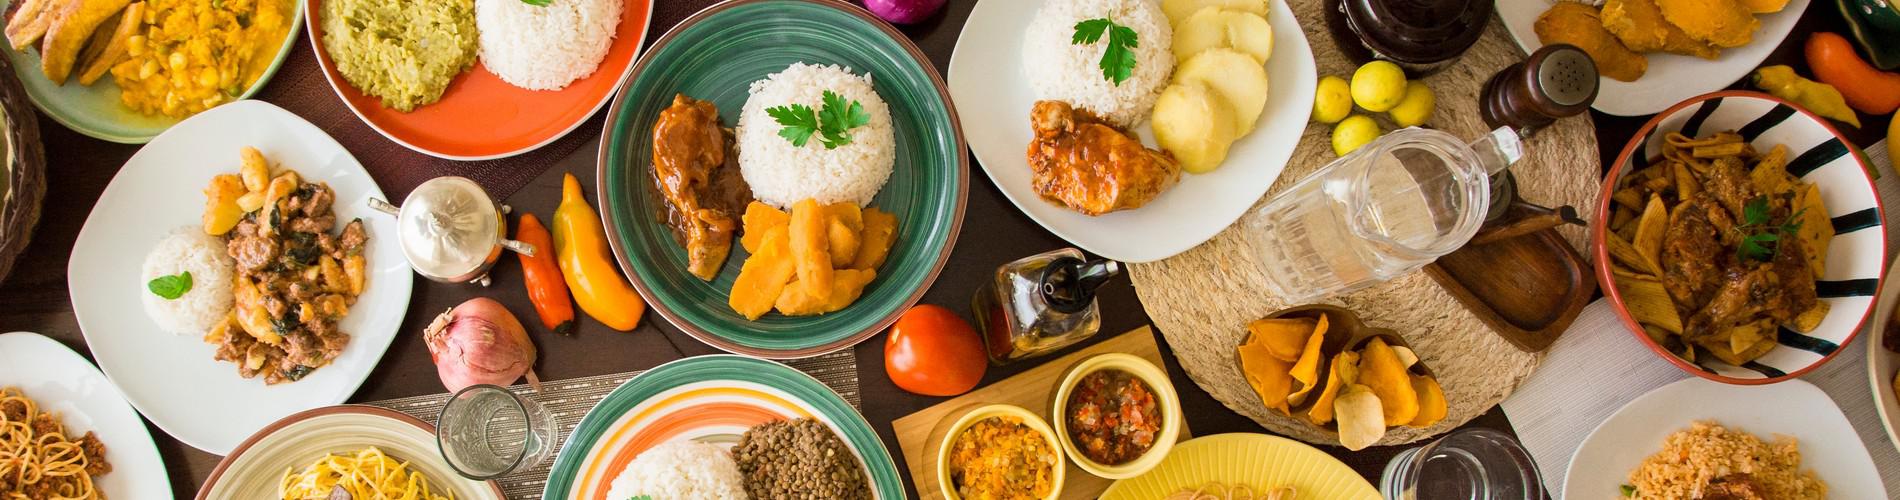 Taste of Peru Culinary Experience